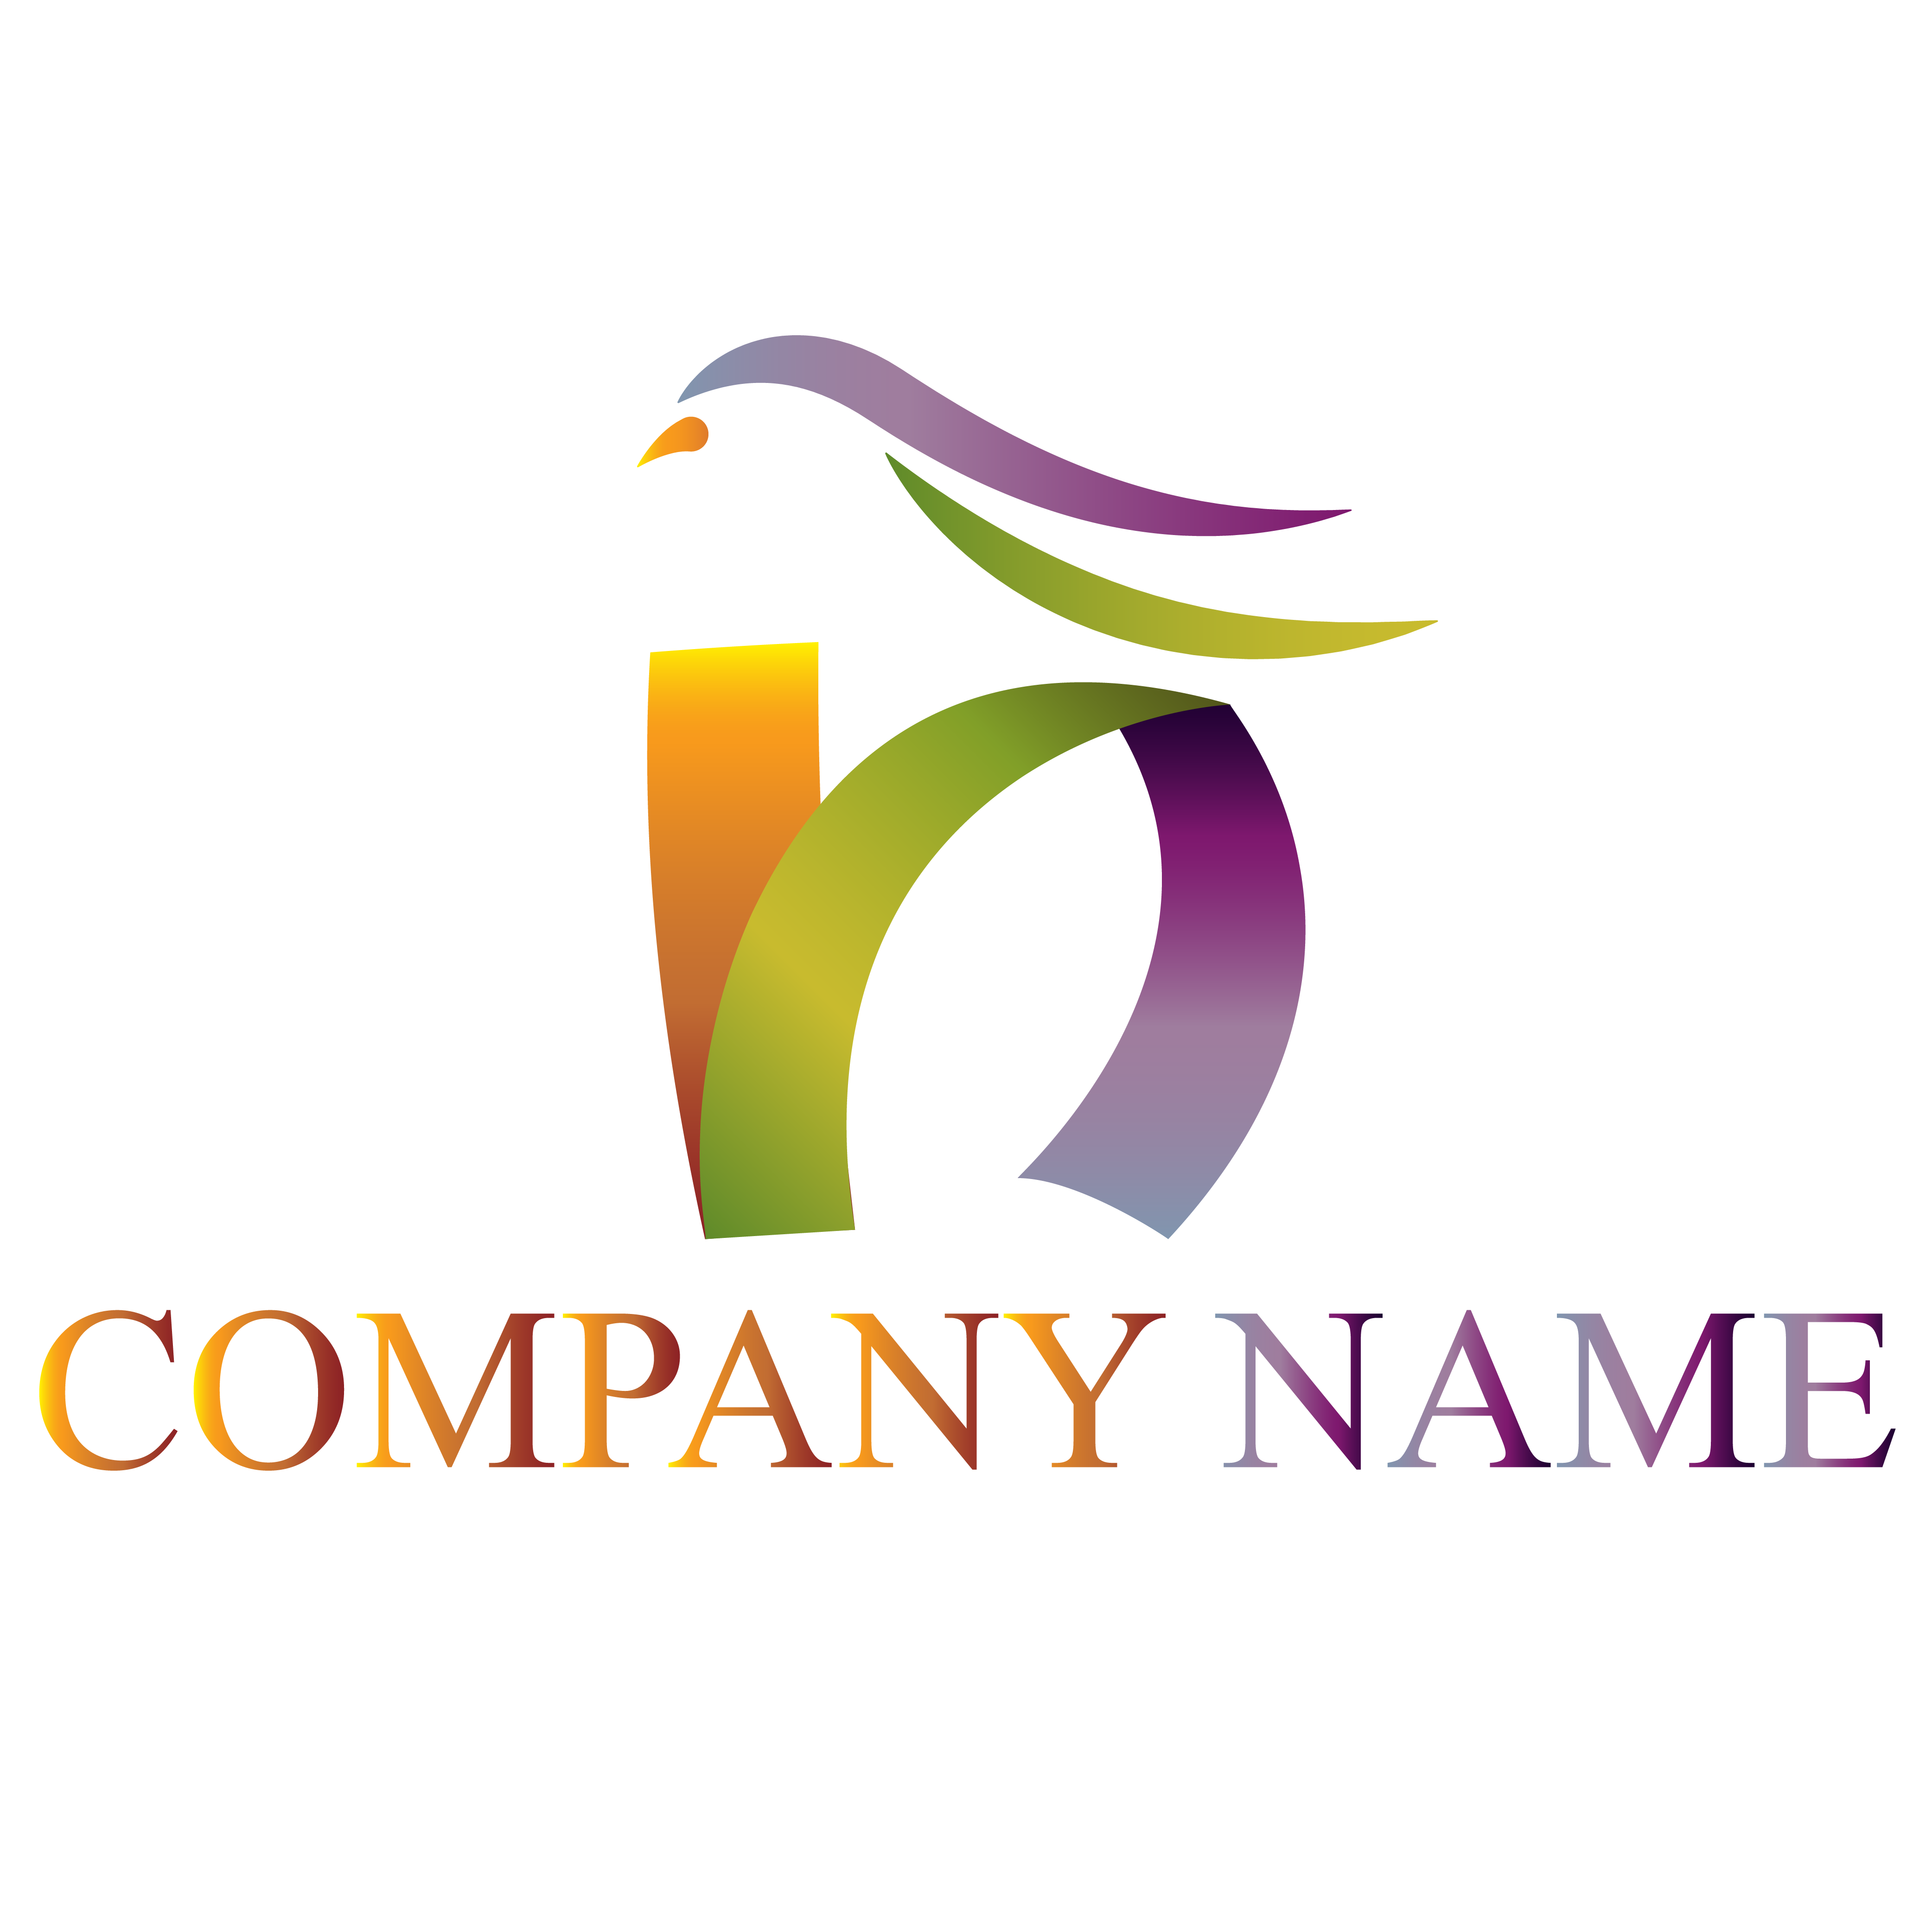 Modern company logo design with mockup